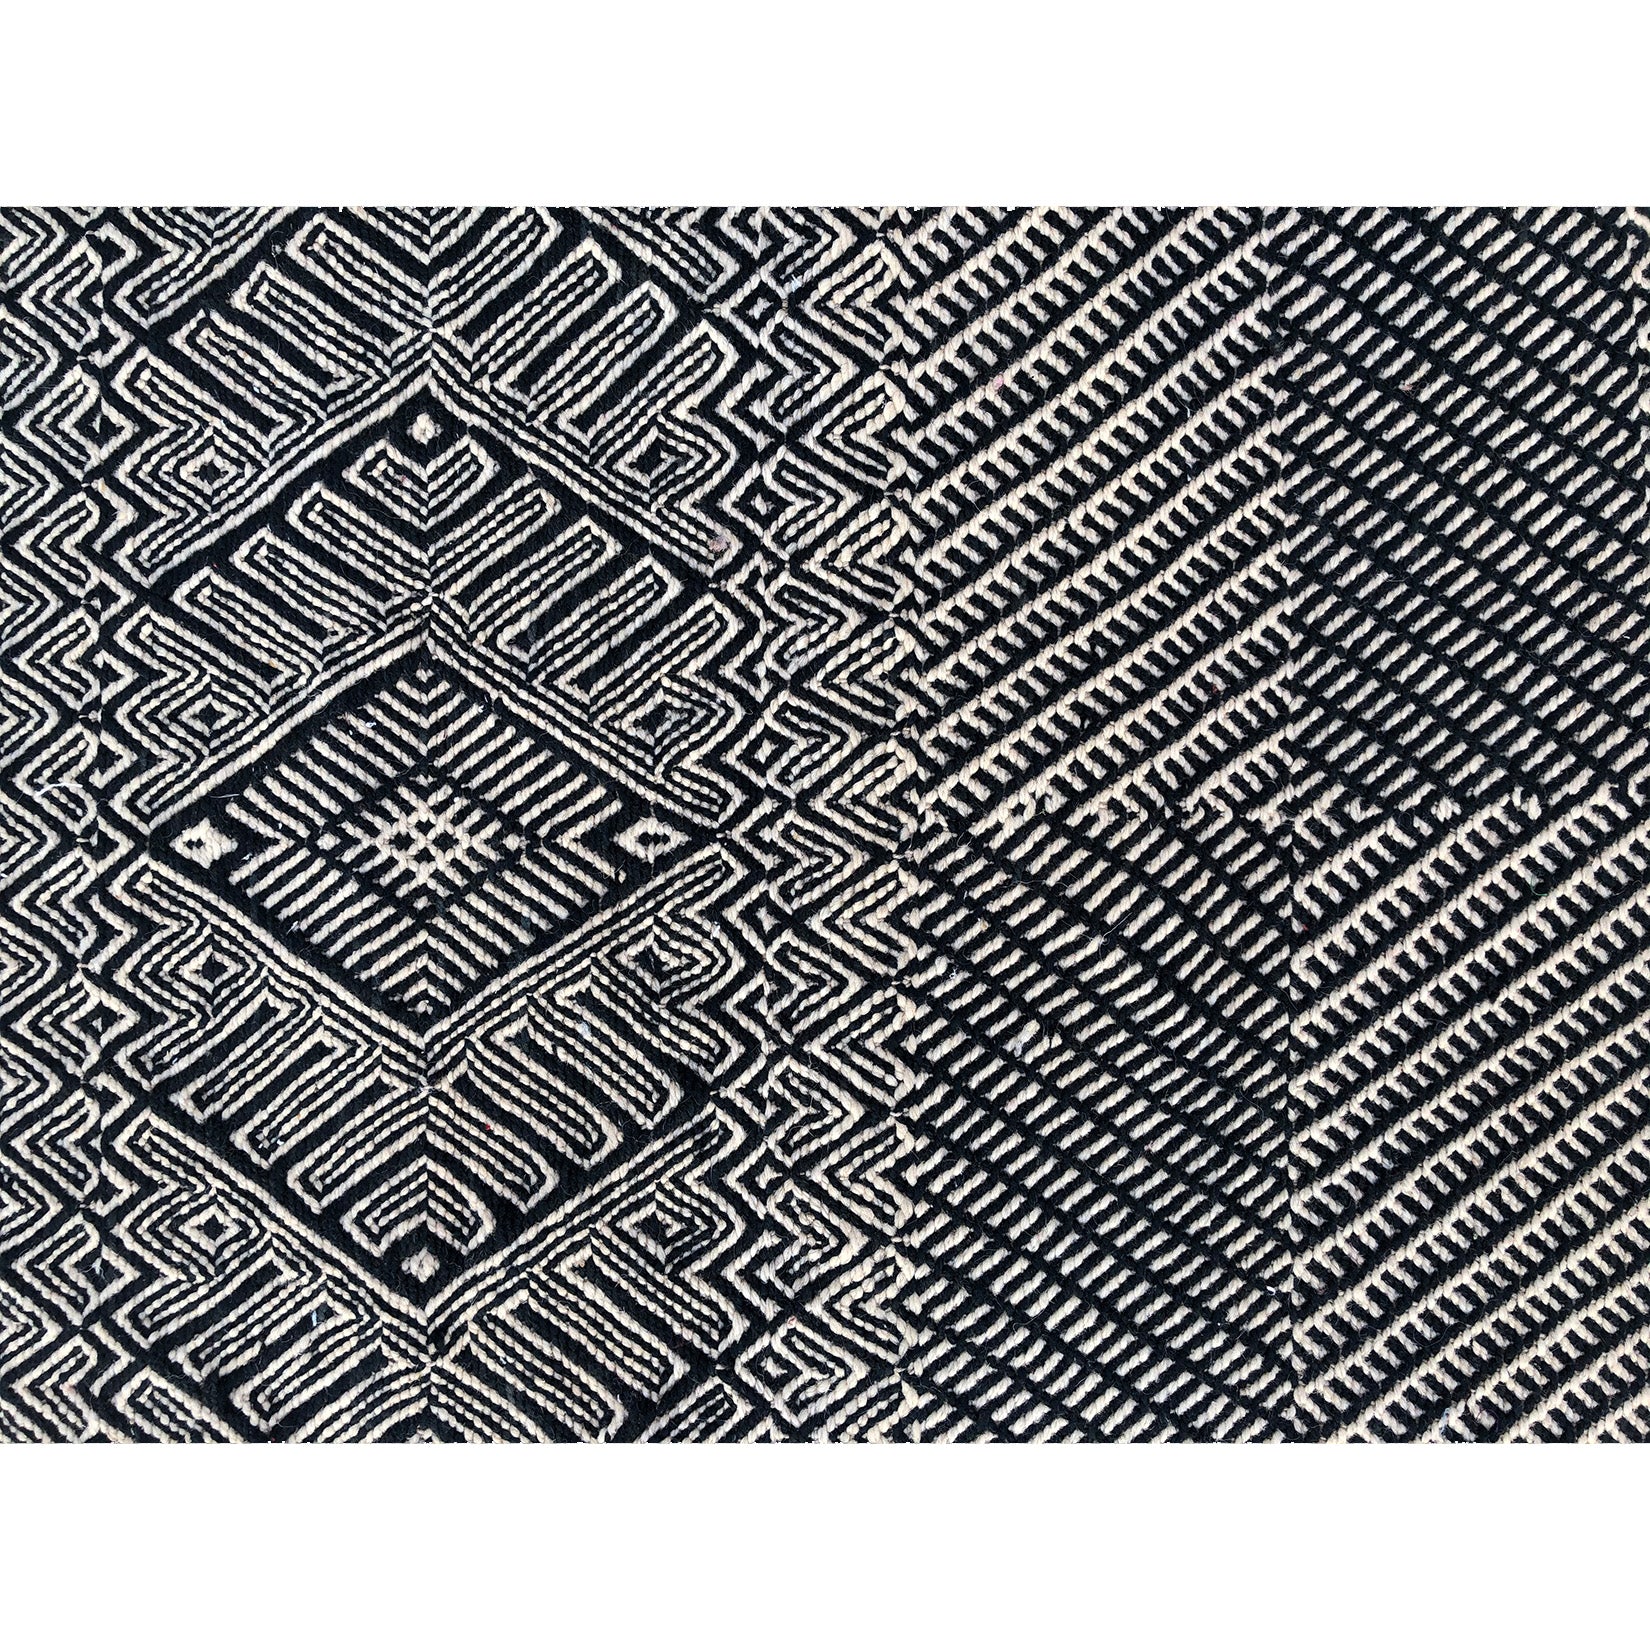 Black and white authentic flat weave berber rug - Kantara | Moroccan Rugs